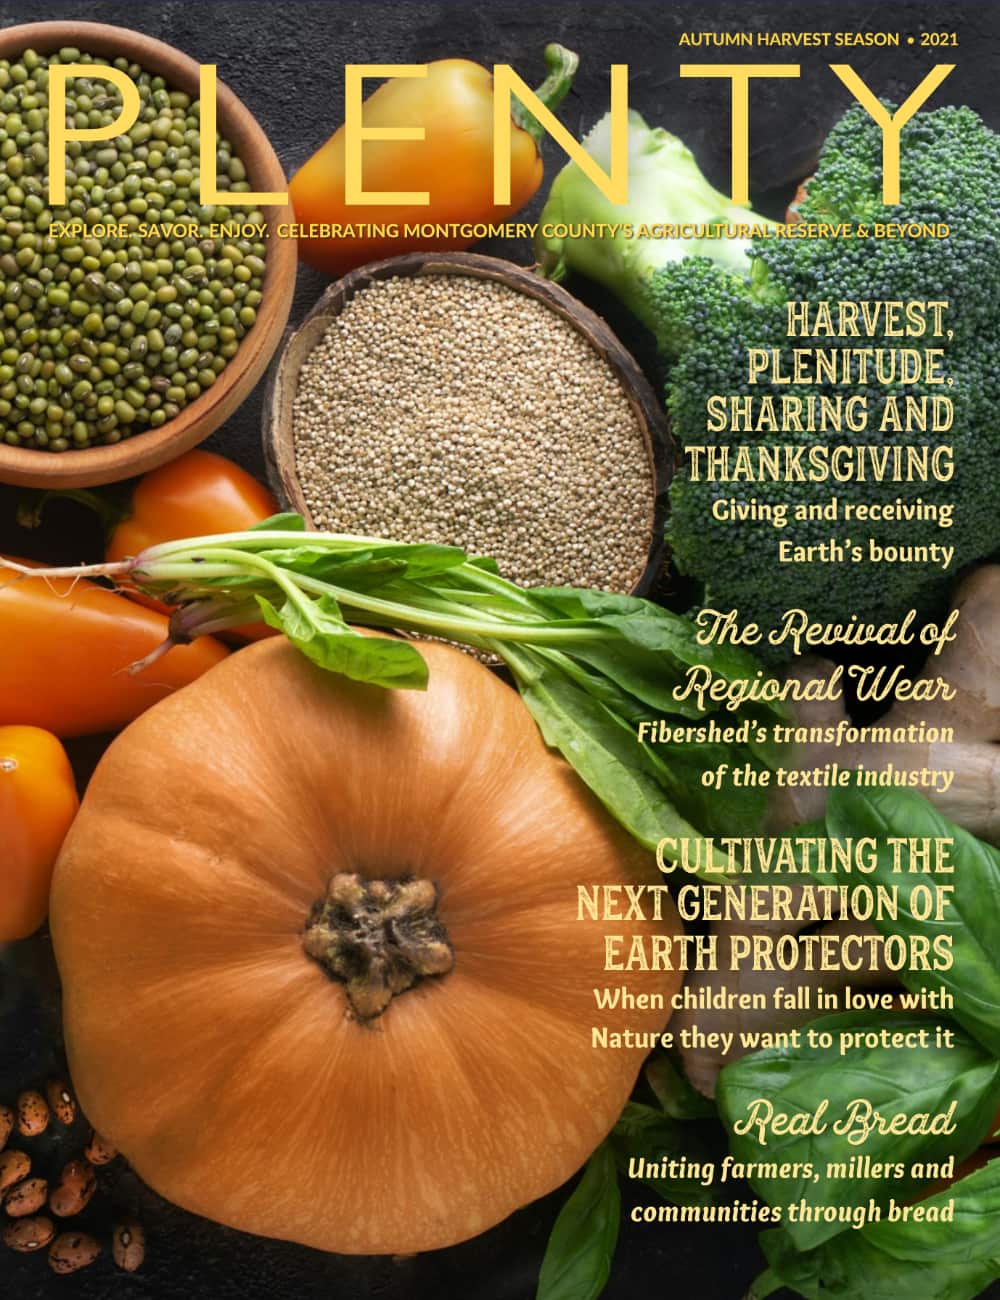 Plenty Magazine Autumn 2021 cover with pumpkin, peas, seeds and broccoli head